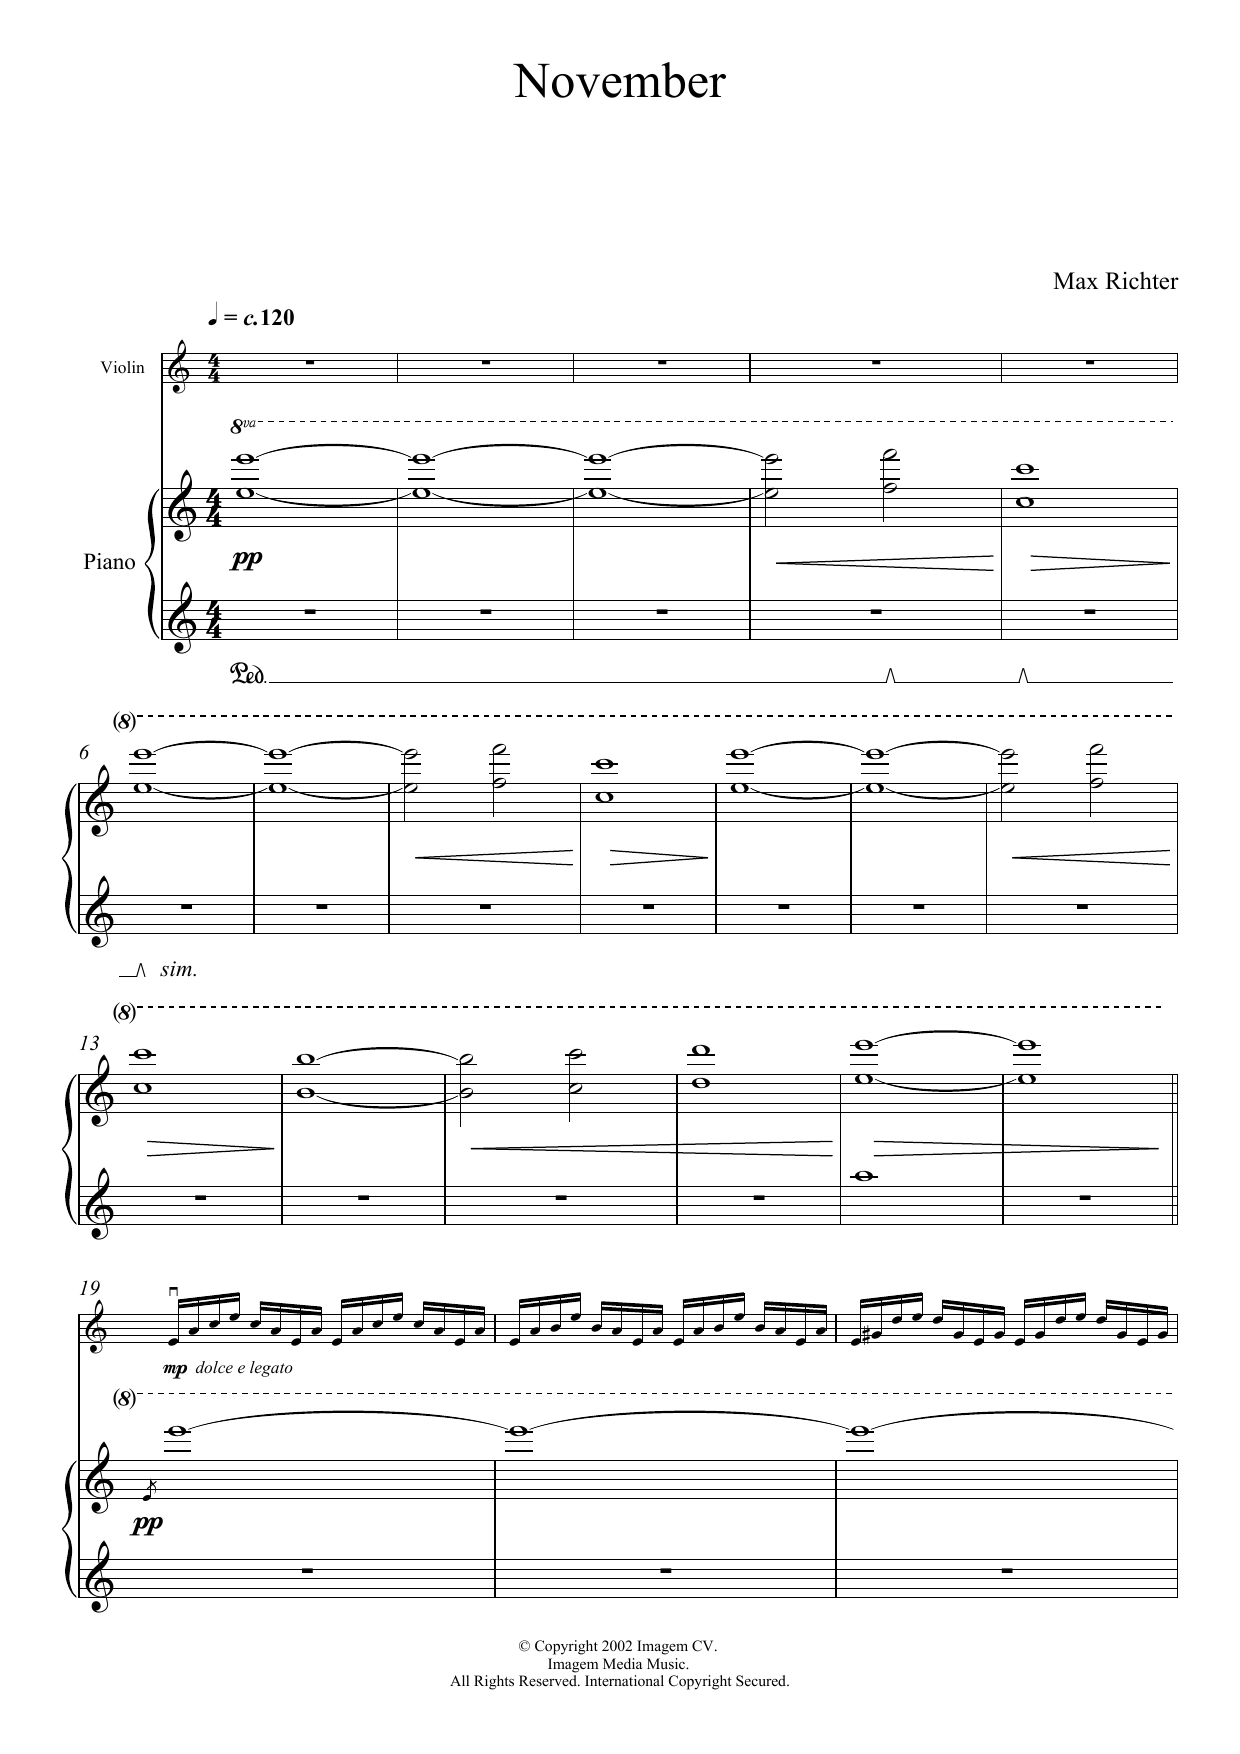 Max Richter November Sheet Music Notes & Chords for Violin Solo - Download or Print PDF